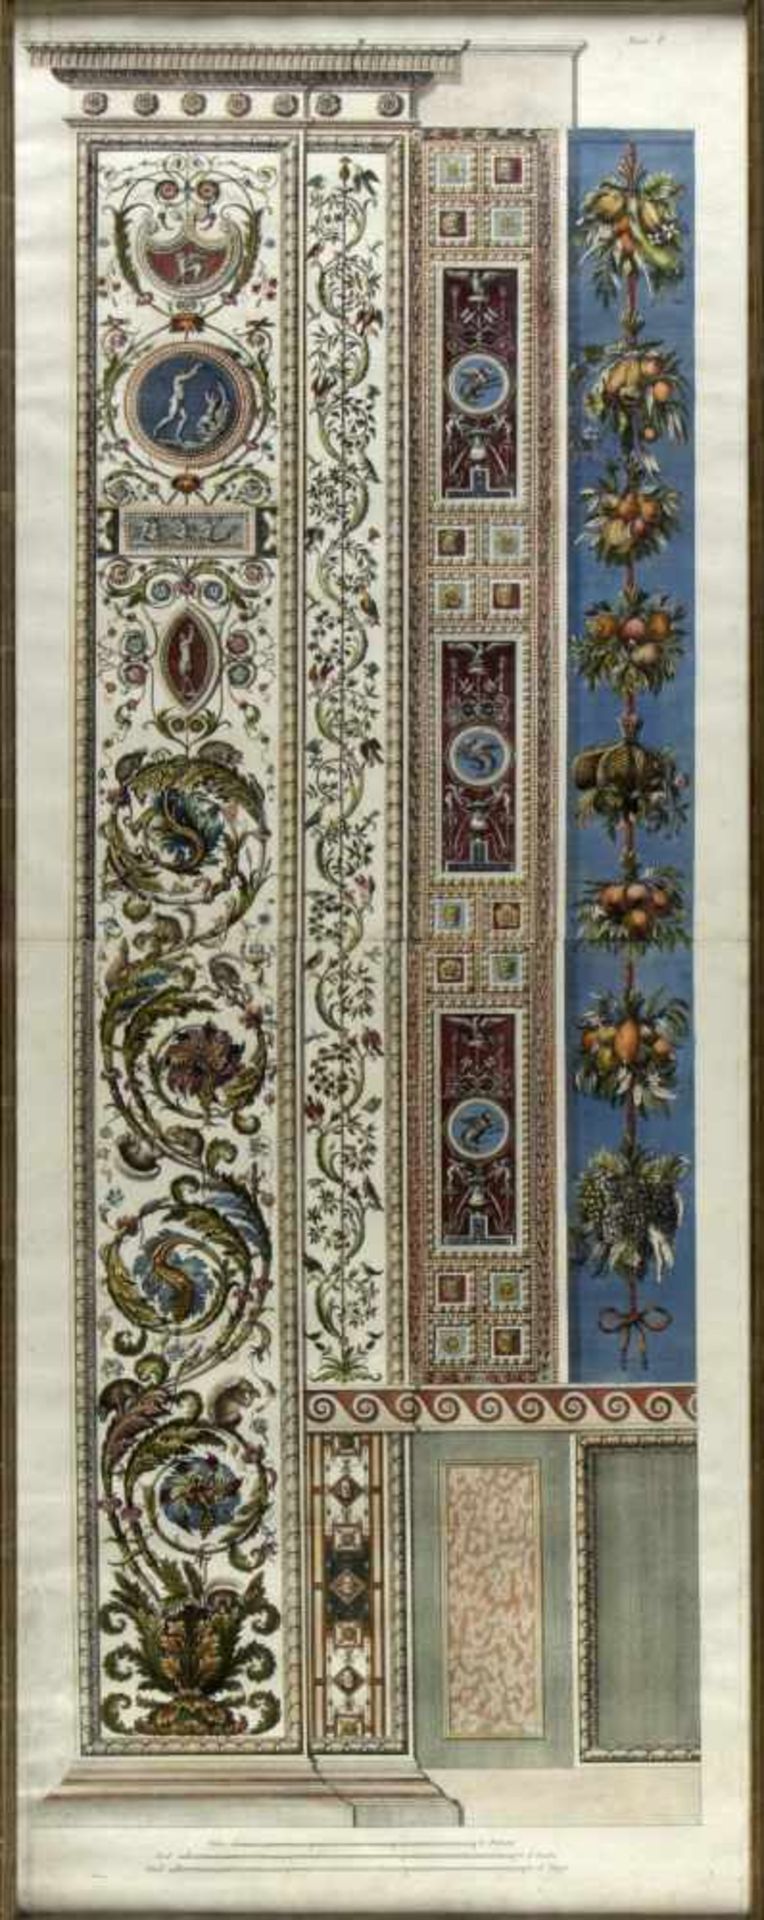 Ottaviani, Giovanni. 1735 - 1808. Zugeschrieben Le logge del vaticano. 2 kol. Kupferstiche. 103 x 39 - Image 3 of 3